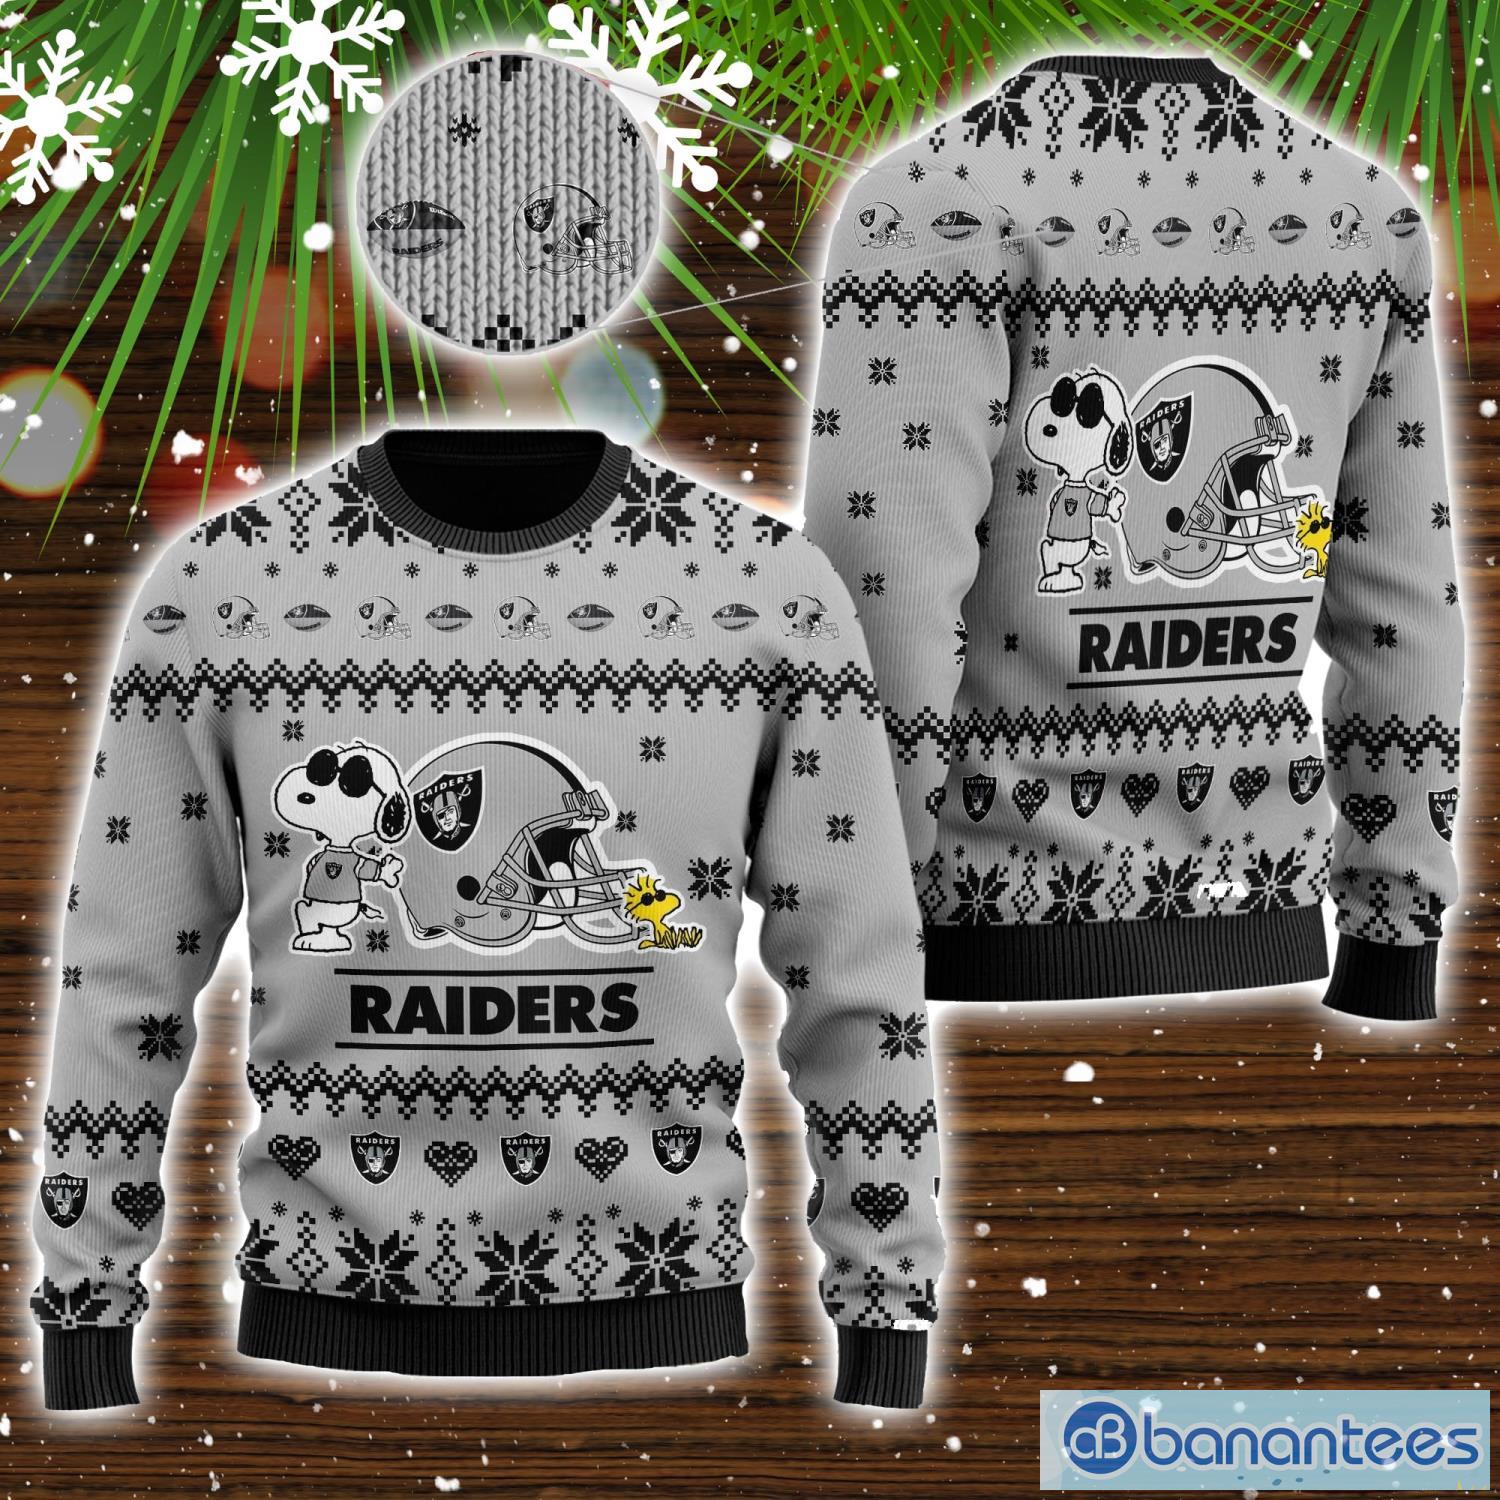 Las Vegas Raiders Cute The Snoopy Show Football Helmet Name Sweater Product Photo 1